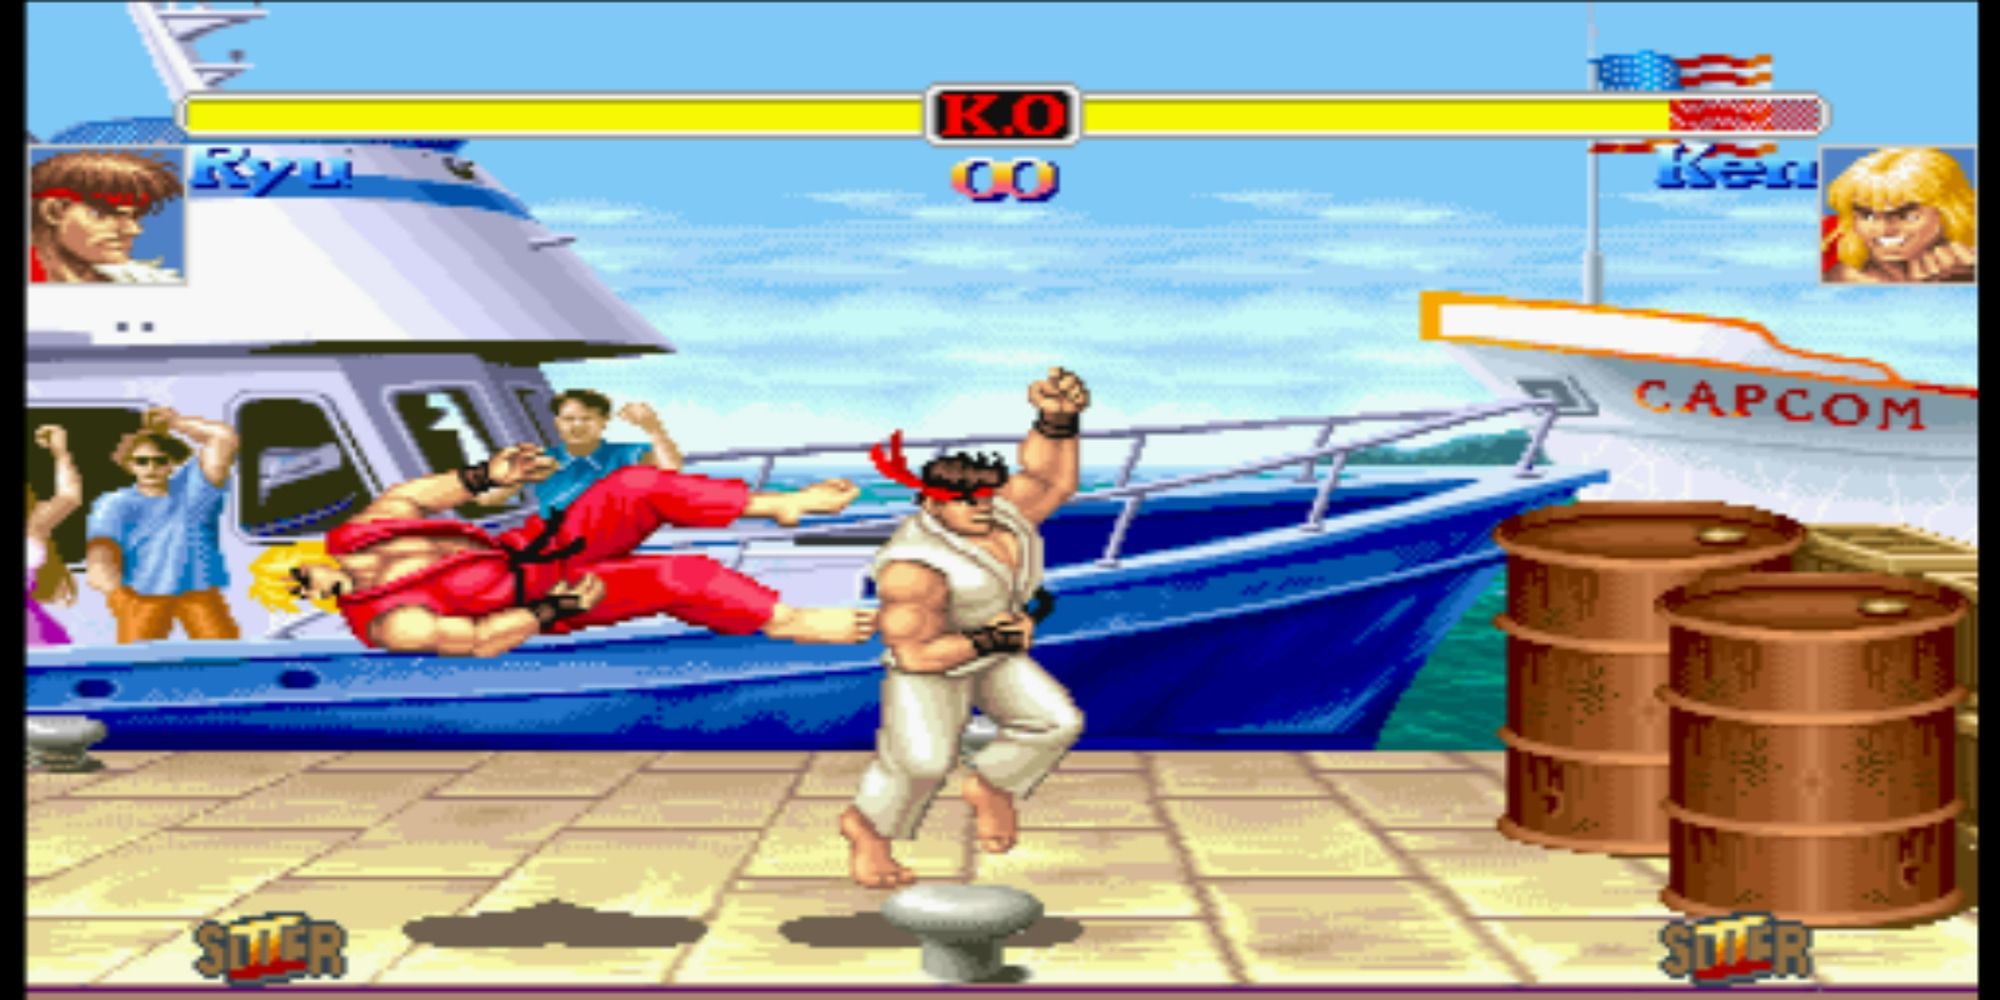 Super SF2 Ryu hits Ken with a Shoryuken on a dock in the US in Hyper Street Fighter 2.